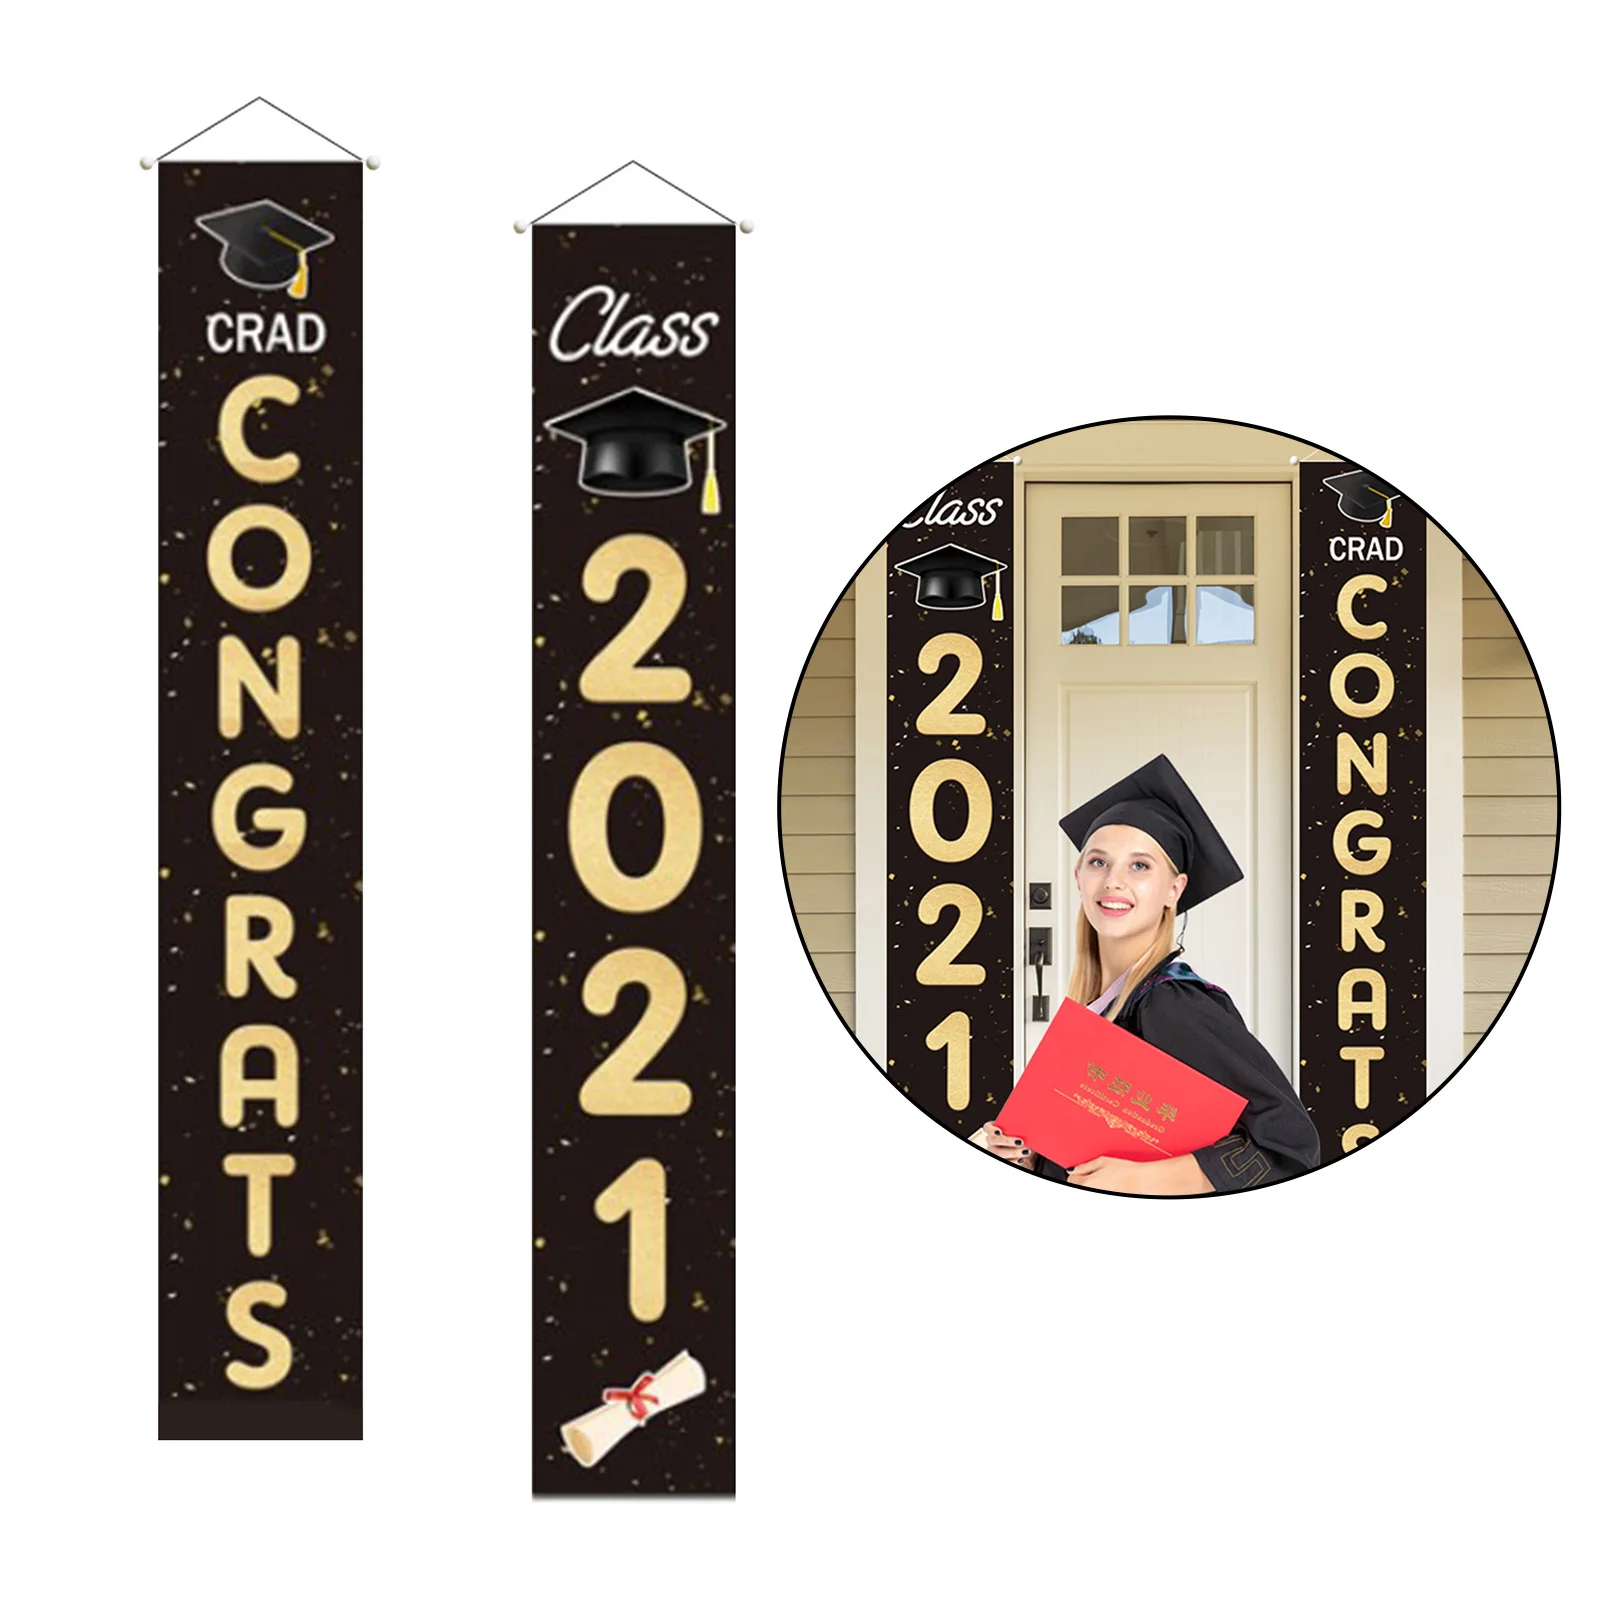 2021 Graduation Decorations Hanging Flags Porch Sign, Graduation Party Decoration for Indoor/Outdoor Home Door Decor